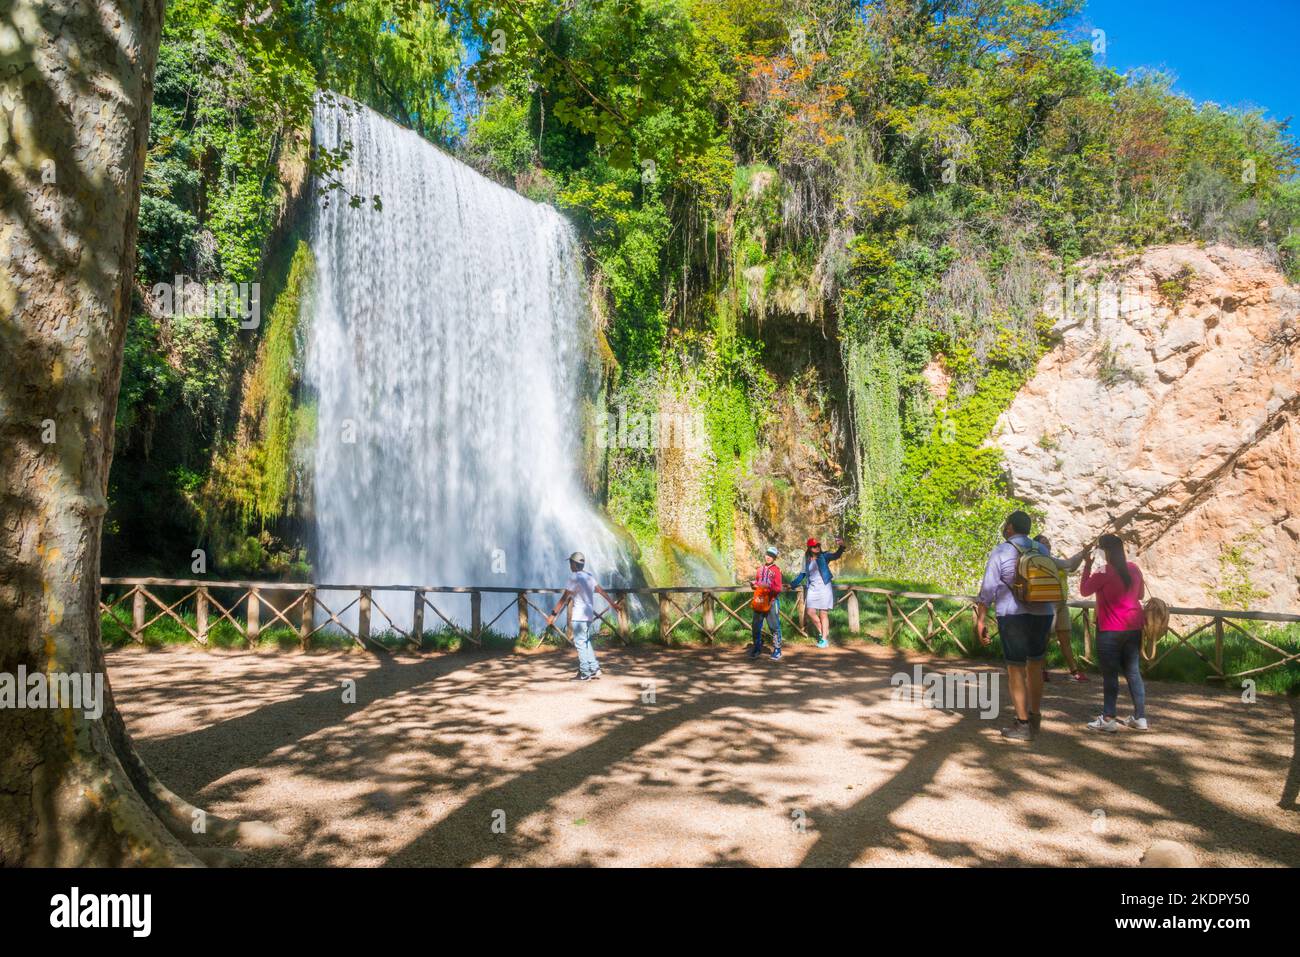 La Caprichosa cascade. Monasterio de Piedra Nature Reserve, Nuevalos, Zaragoza province, Aragon, Spain. Stock Photo